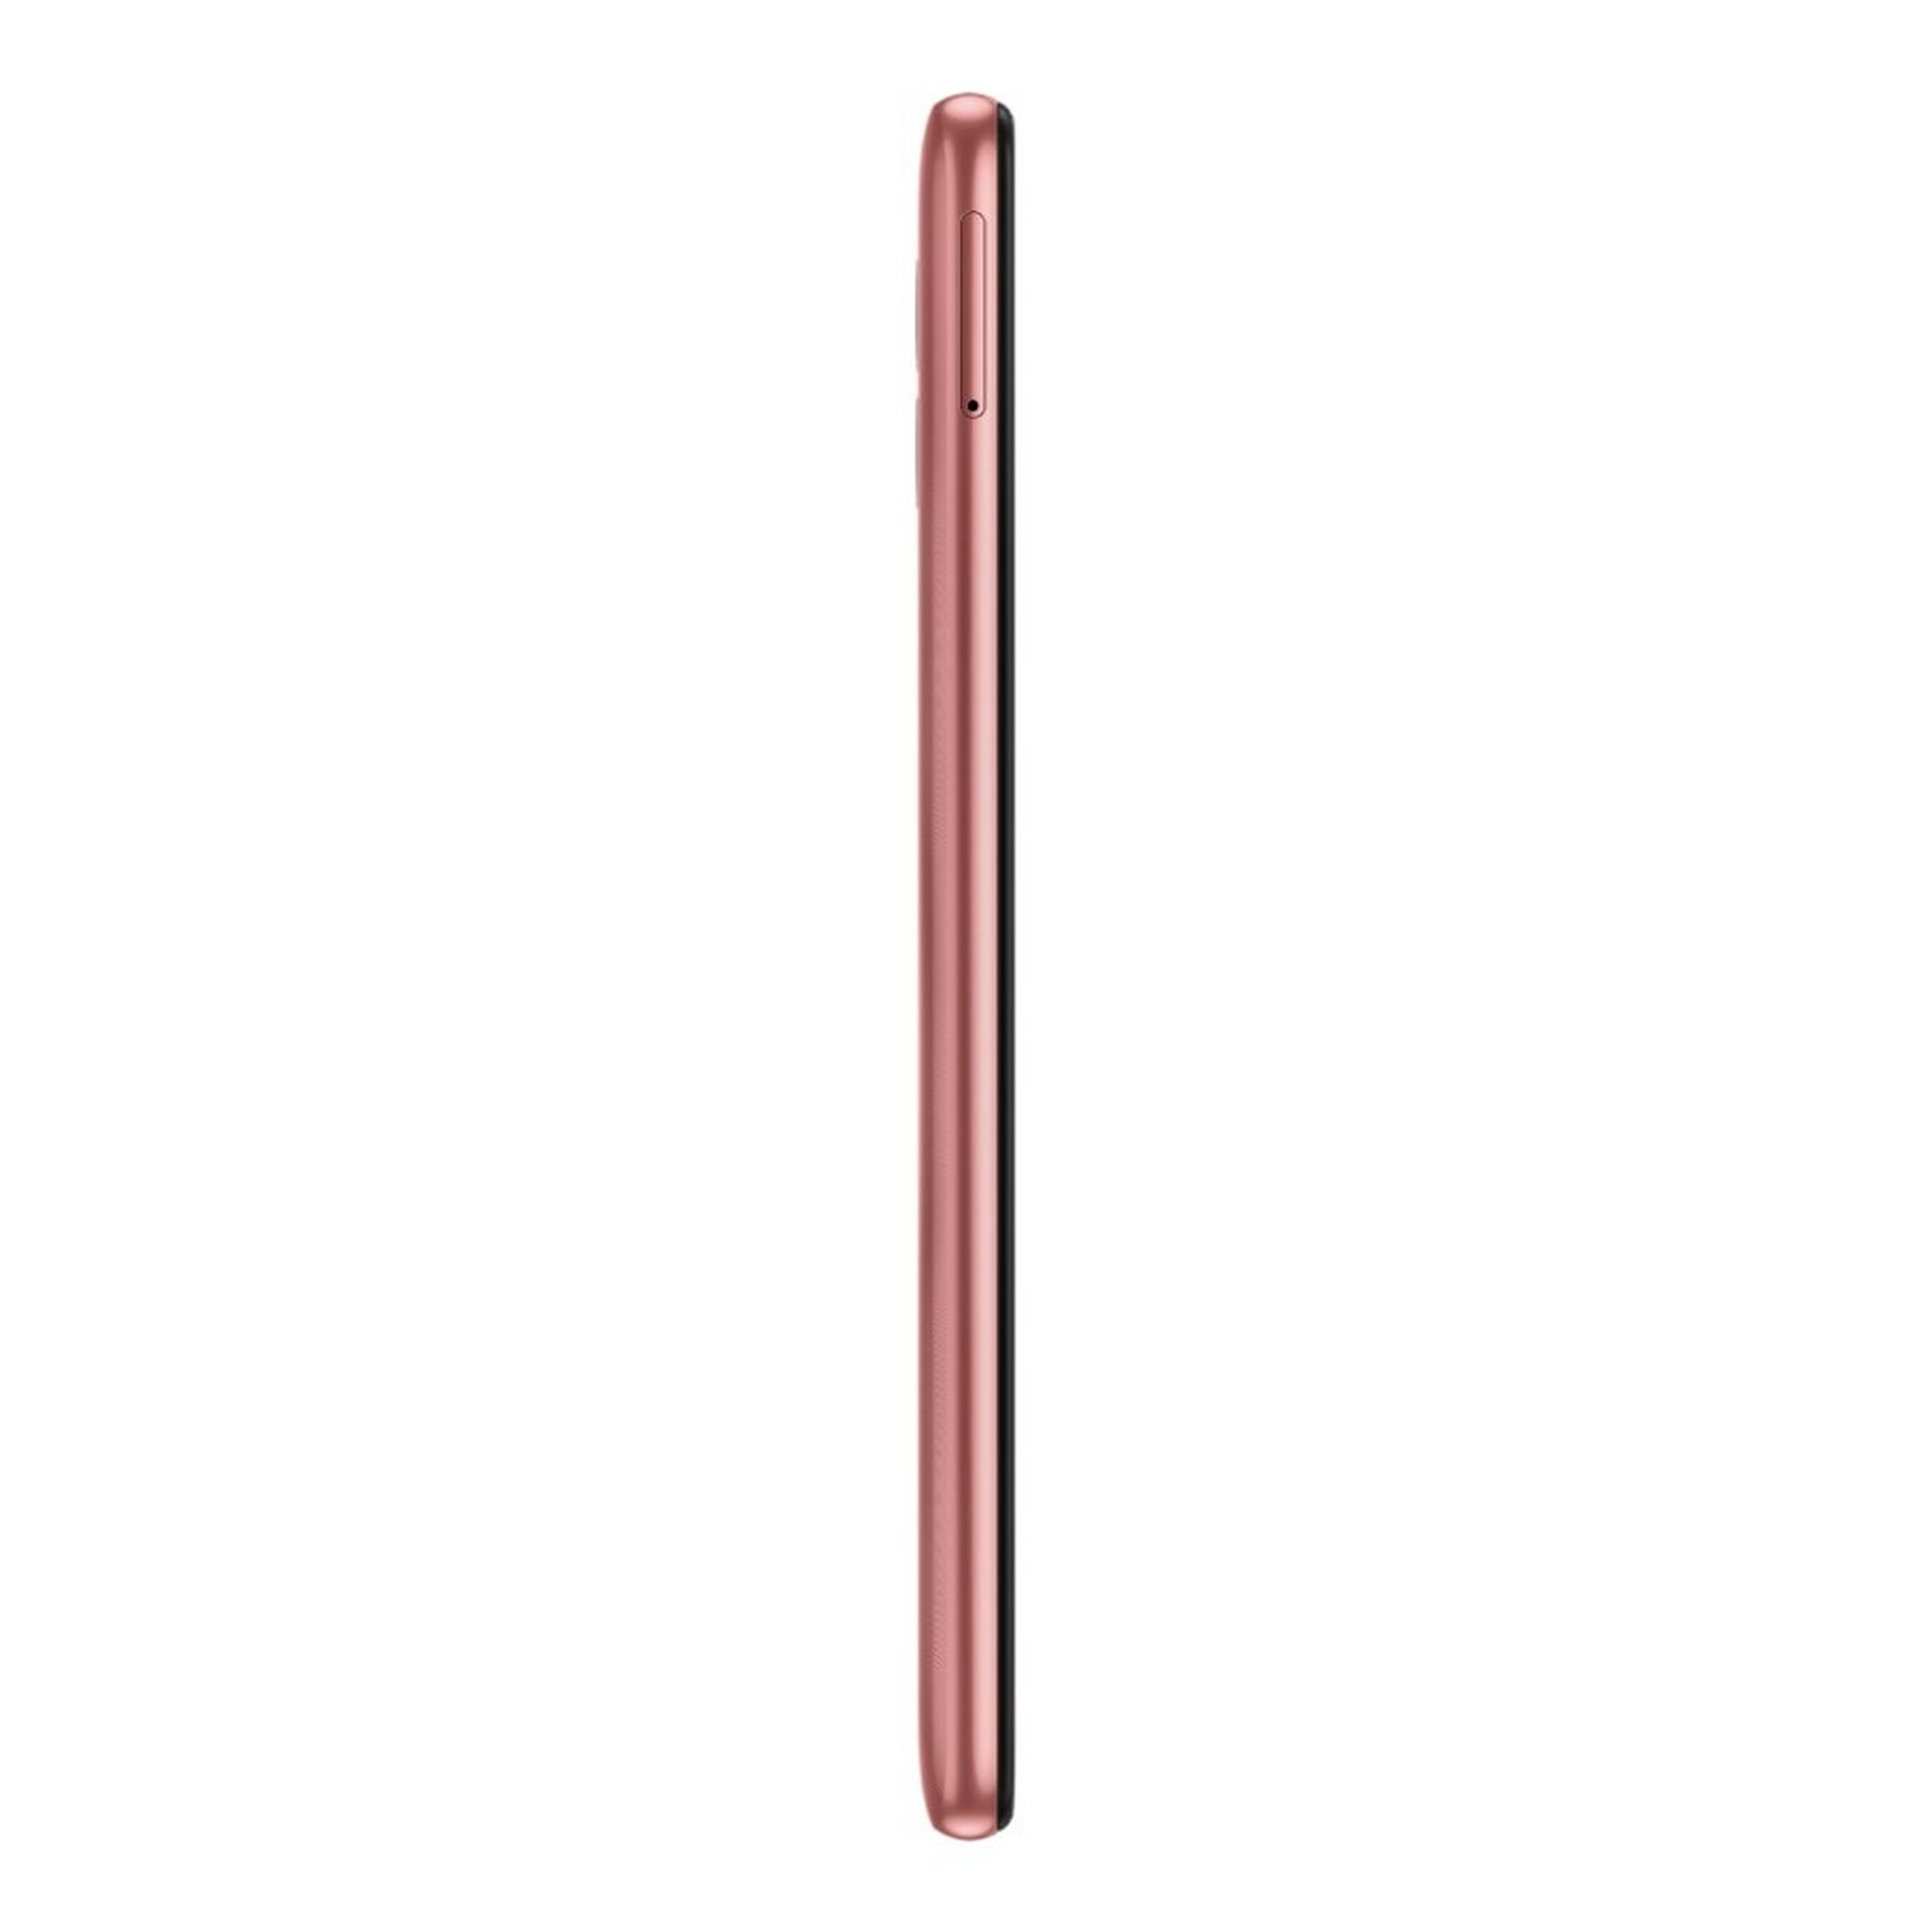 Samsung Galaxy A04e 32GB Phone - Pink